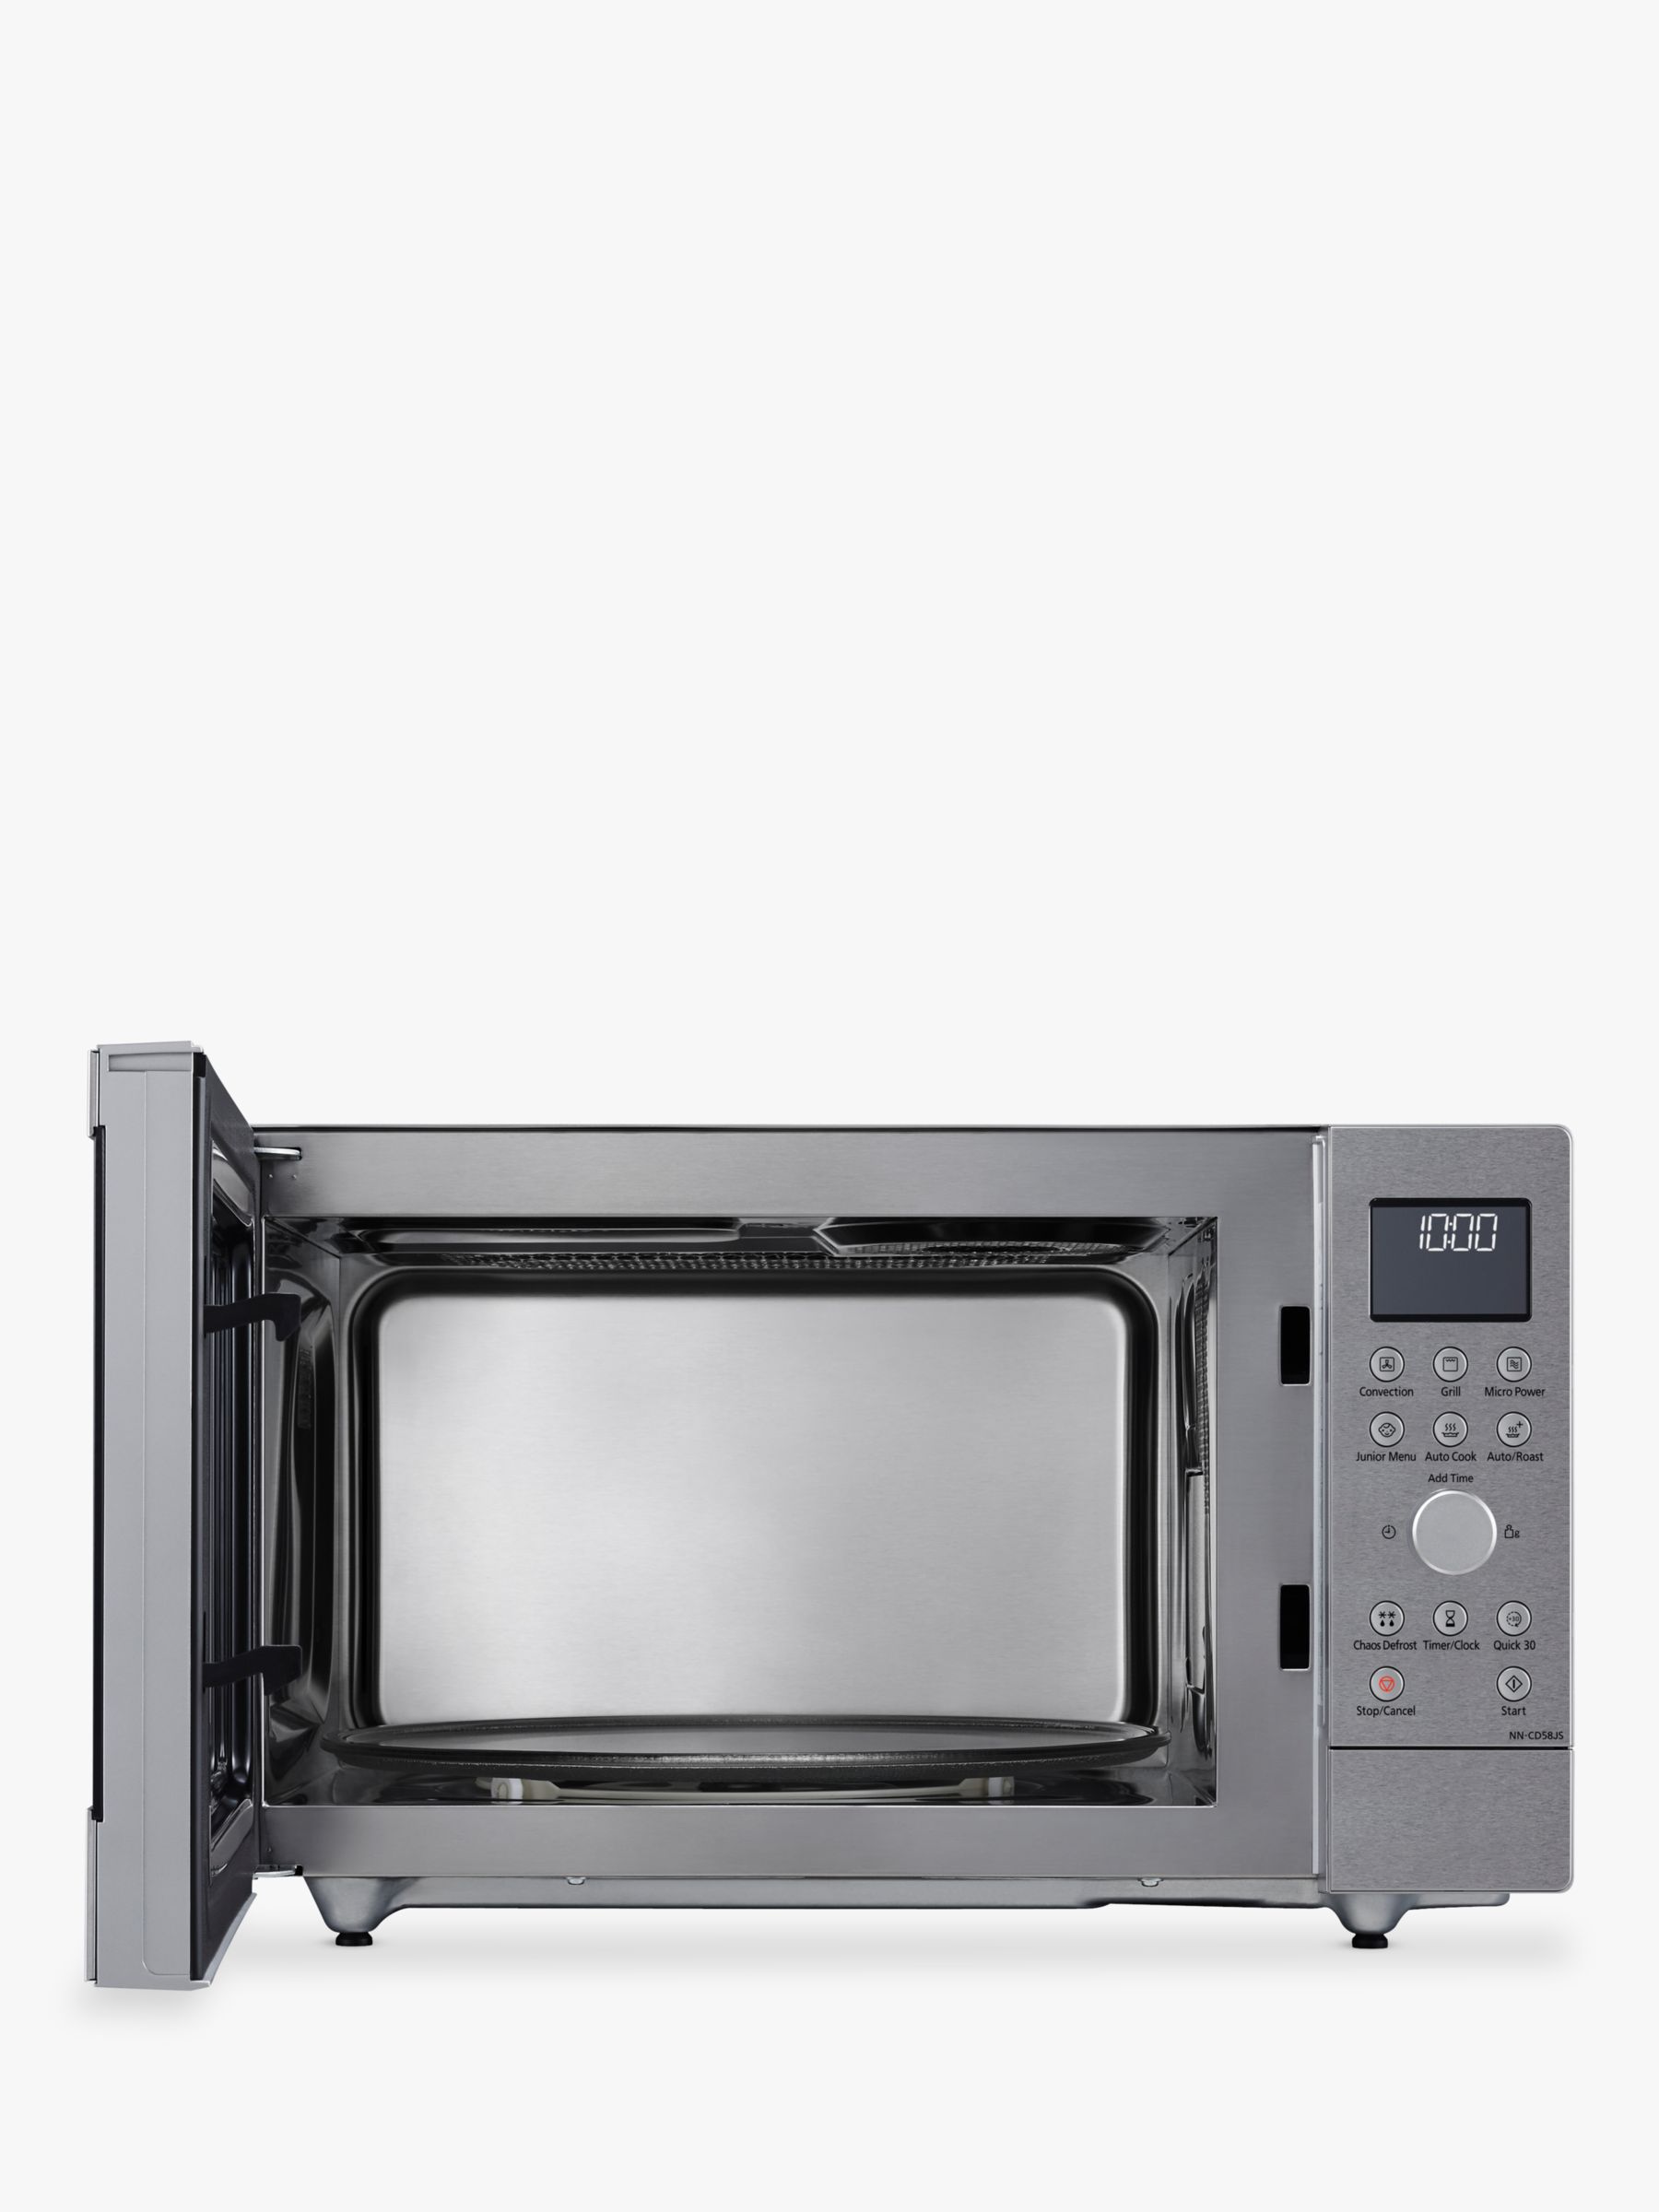 Panasonic Nn Cd58jsbpq 27l Slimline Combination Microwave Oven Stainless Steel